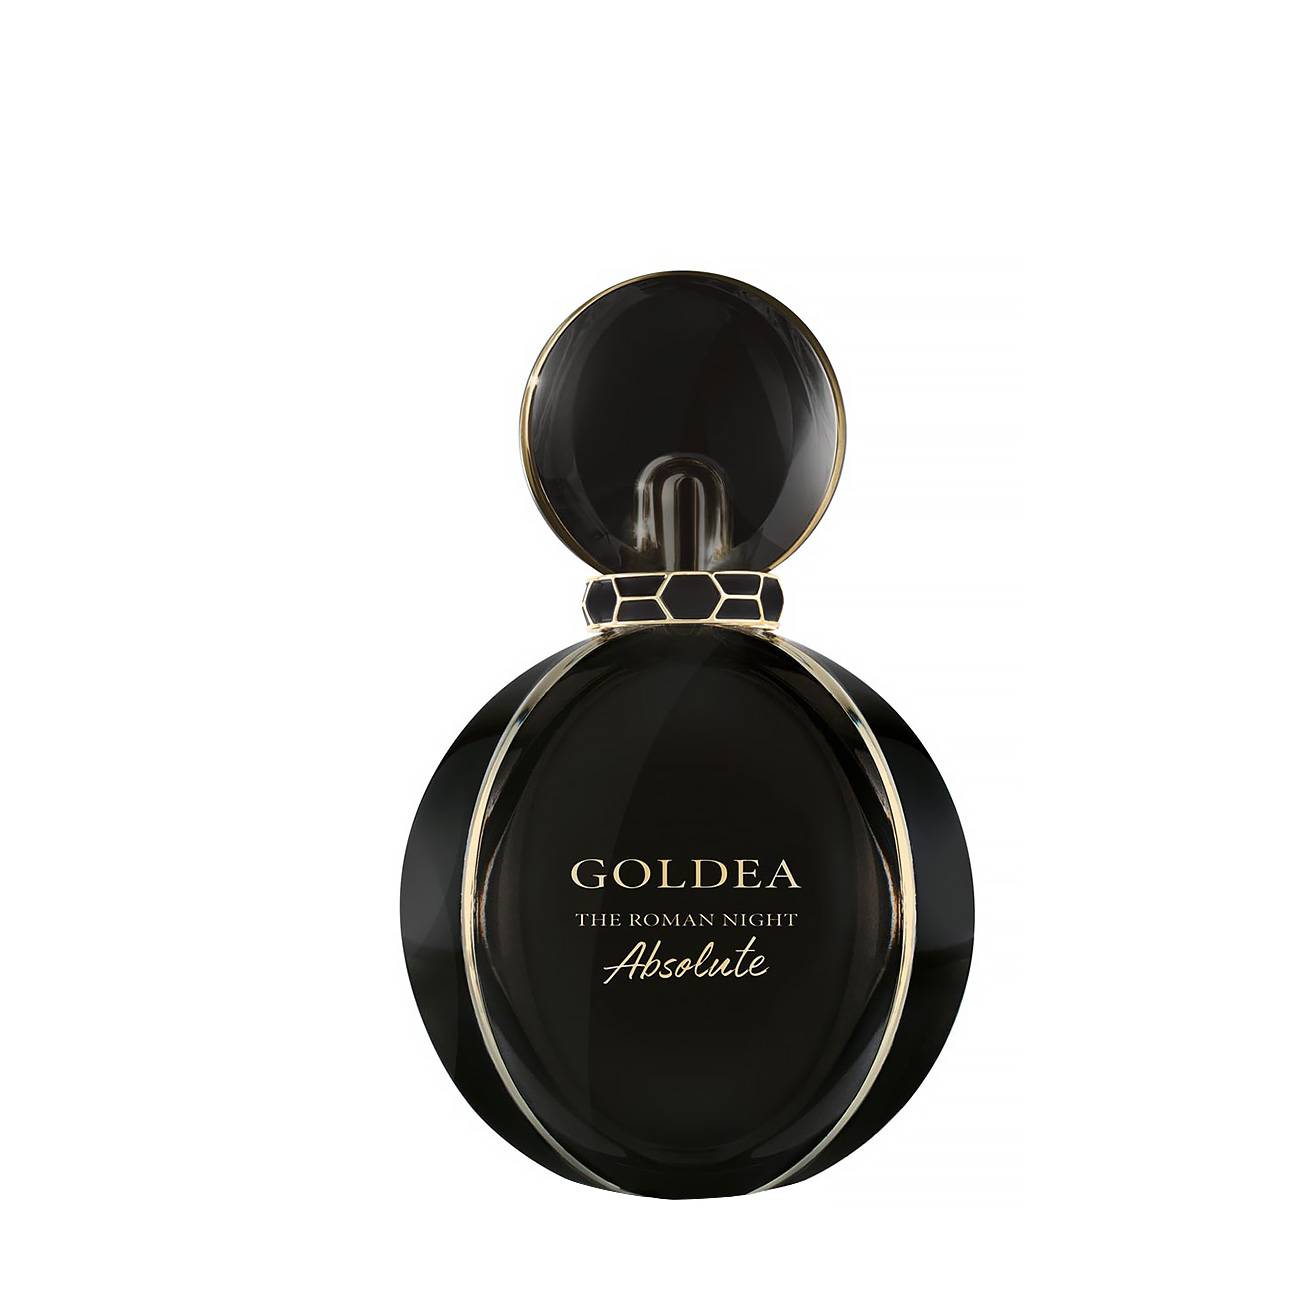 Apa de Parfum Bvlgari GOLDEA THE ROMAN NIGHT ABSOLUTE 75ml cu comanda online